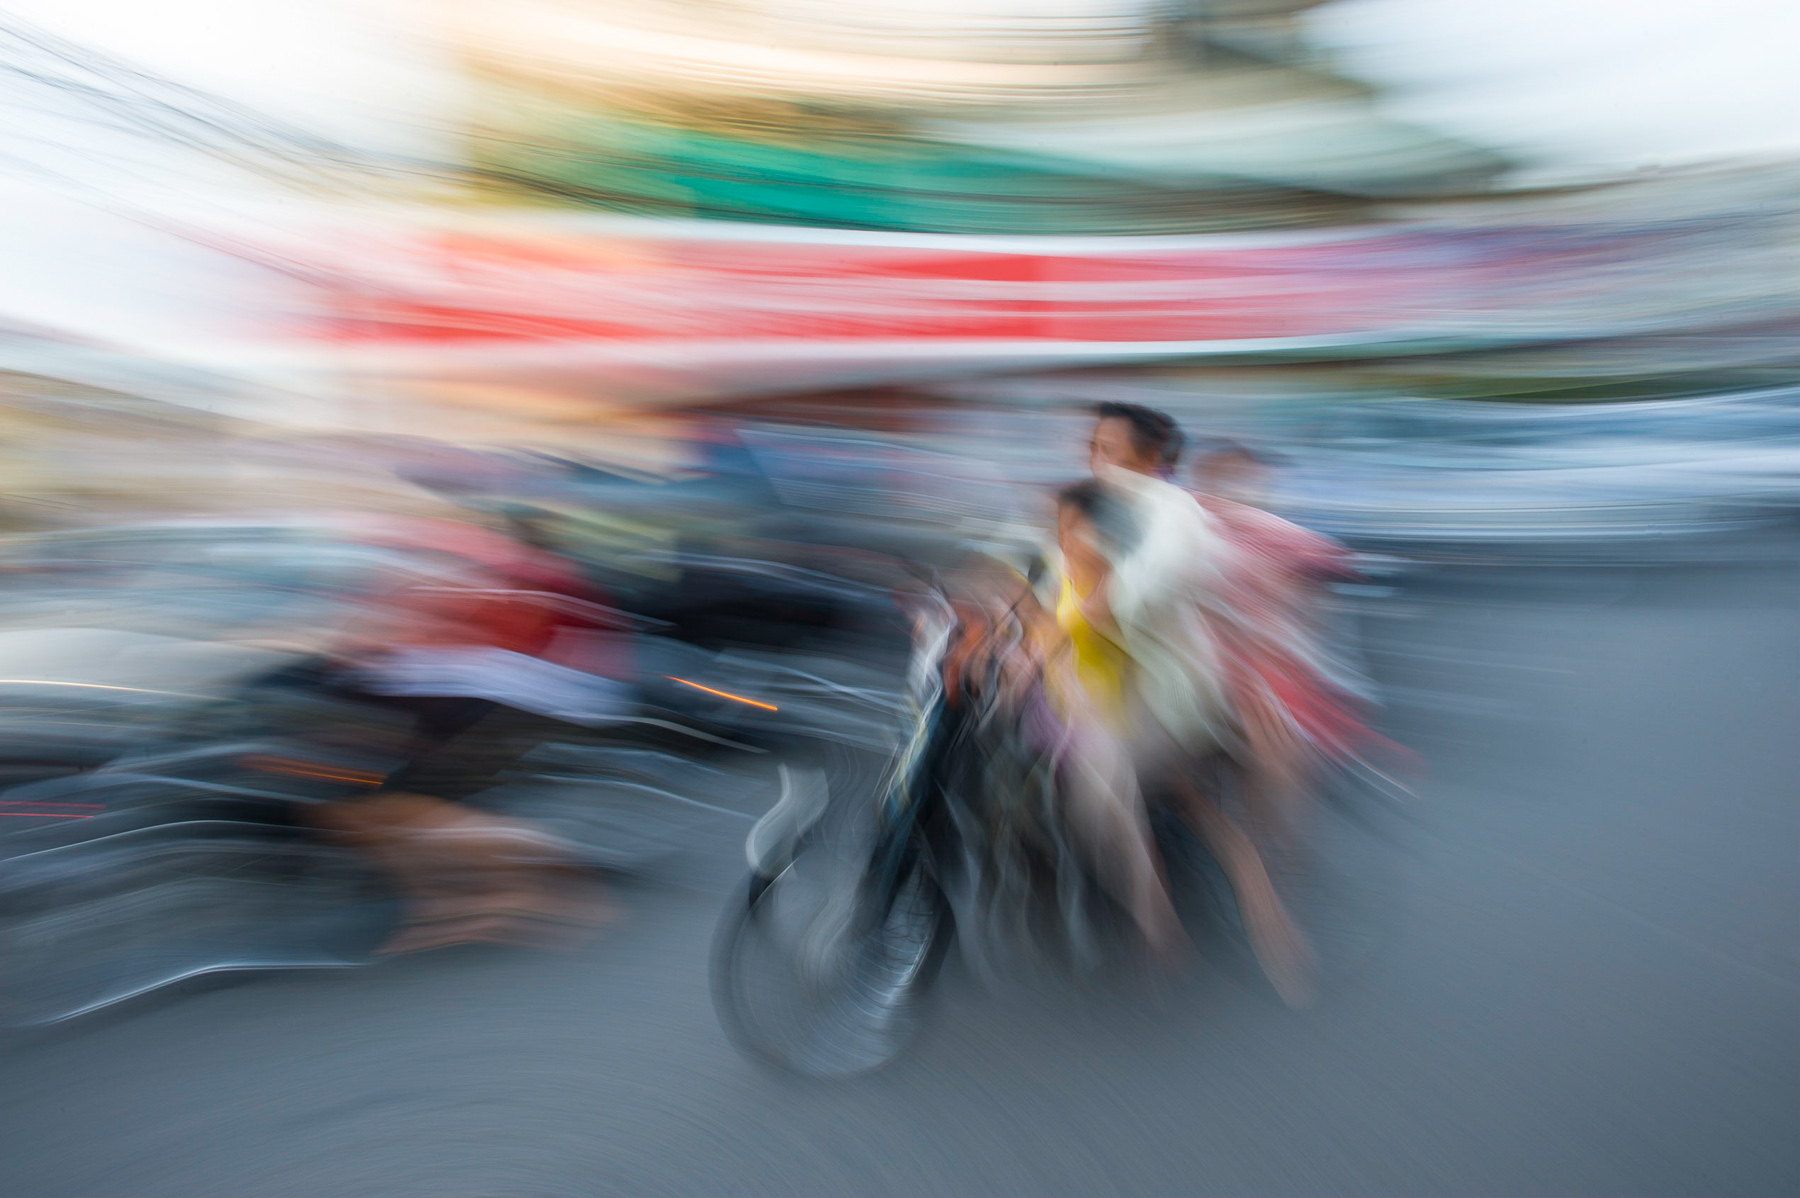 Blurred scooter Phnom Penh, Cambodia.